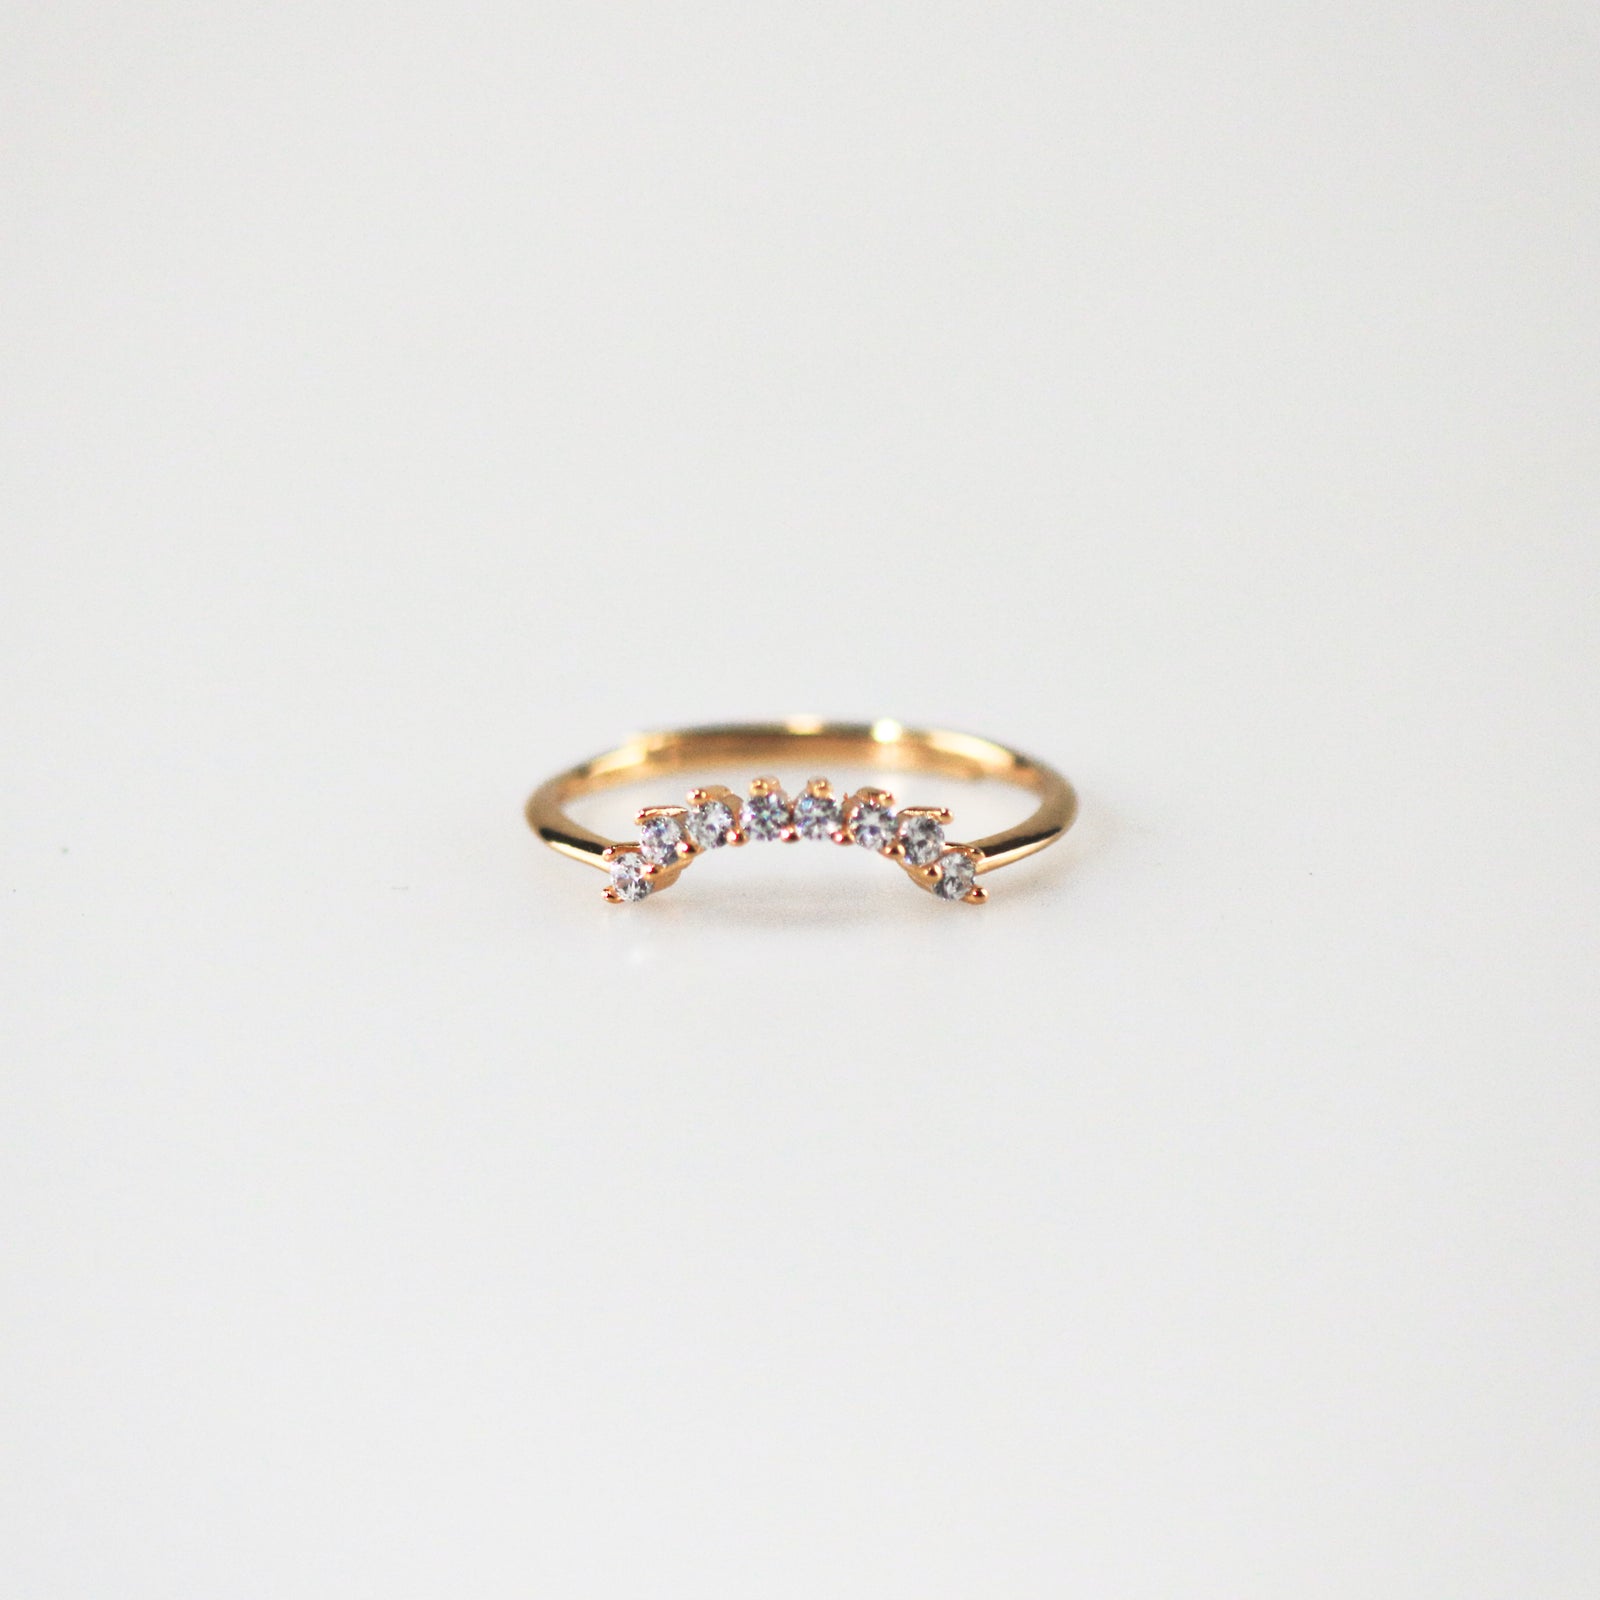 Meideya Jewelry Arch Band Ring Gold vermeil